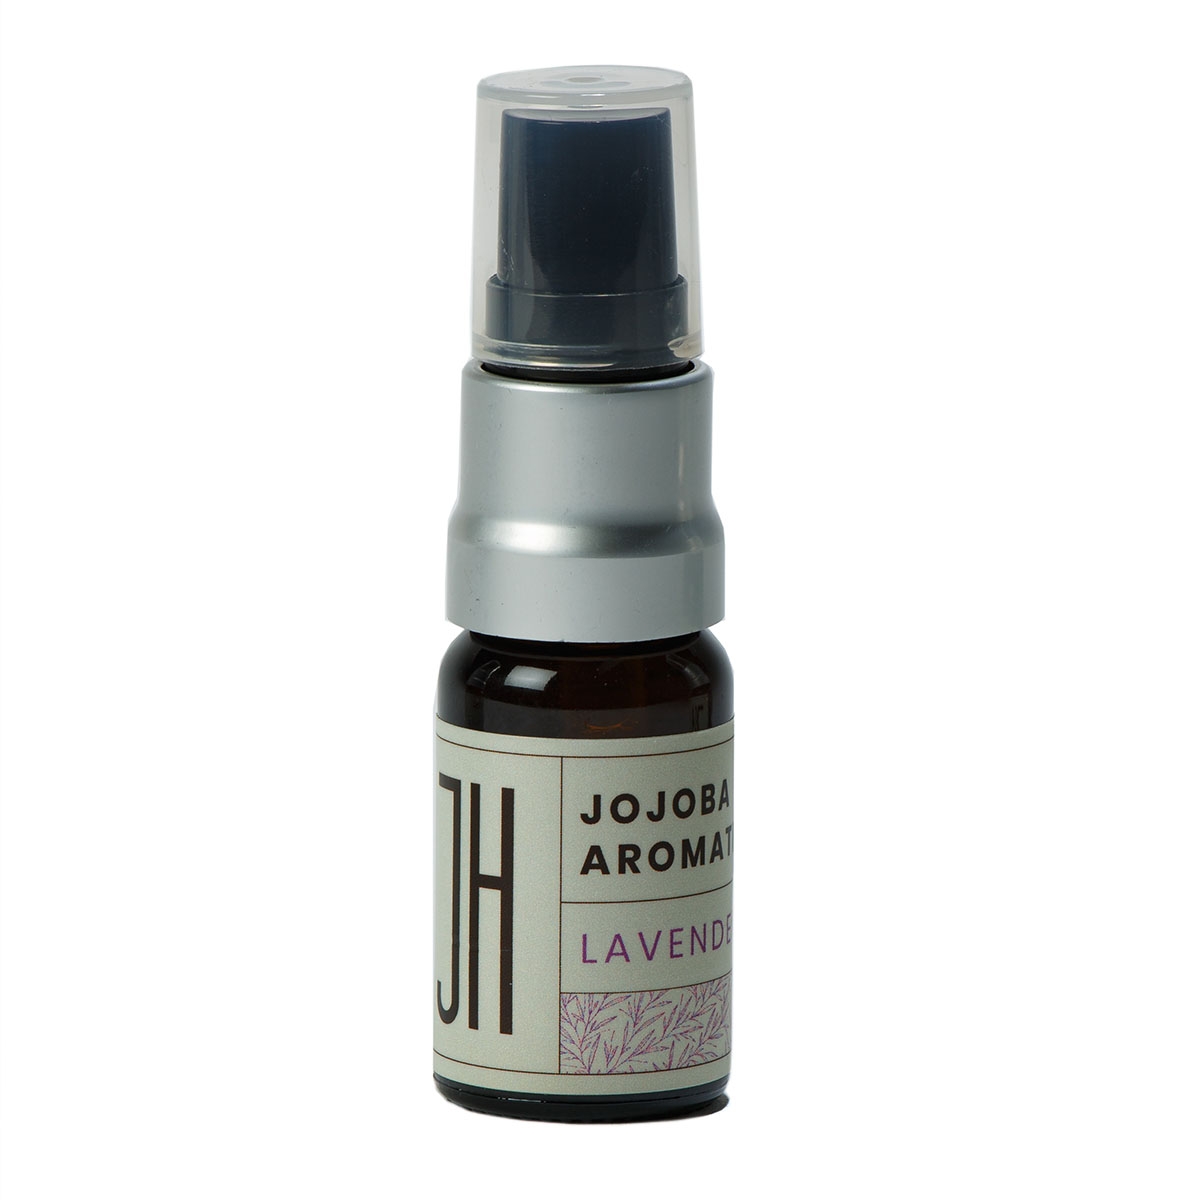 Jojoba Hatzerim Jojoba Aromatic Oil – Lavender (10 ml / 0.33 fl.oz.) - 1